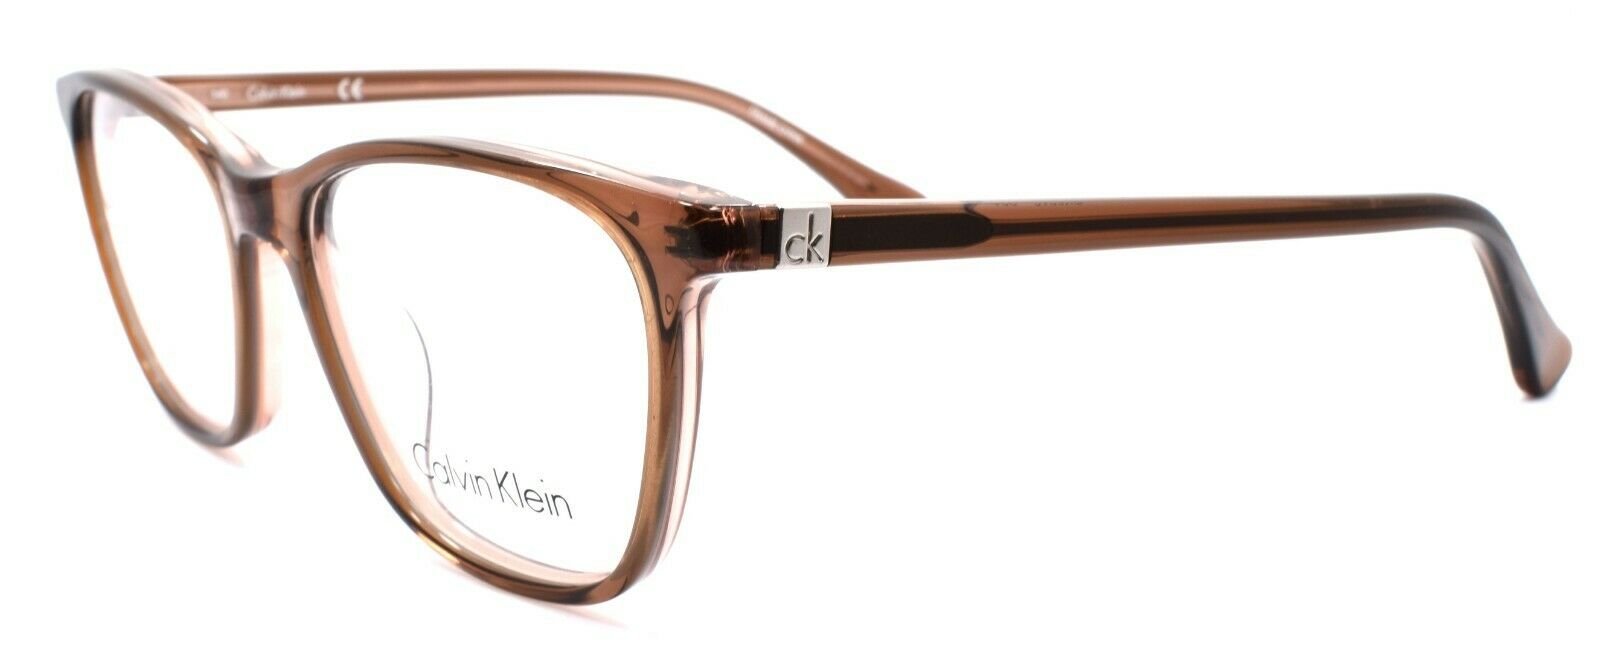 1-Calvin Klein CK5918 201 Eyeglasses Frames PETITE 48-15-135 Brown-750779094082-IKSpecs